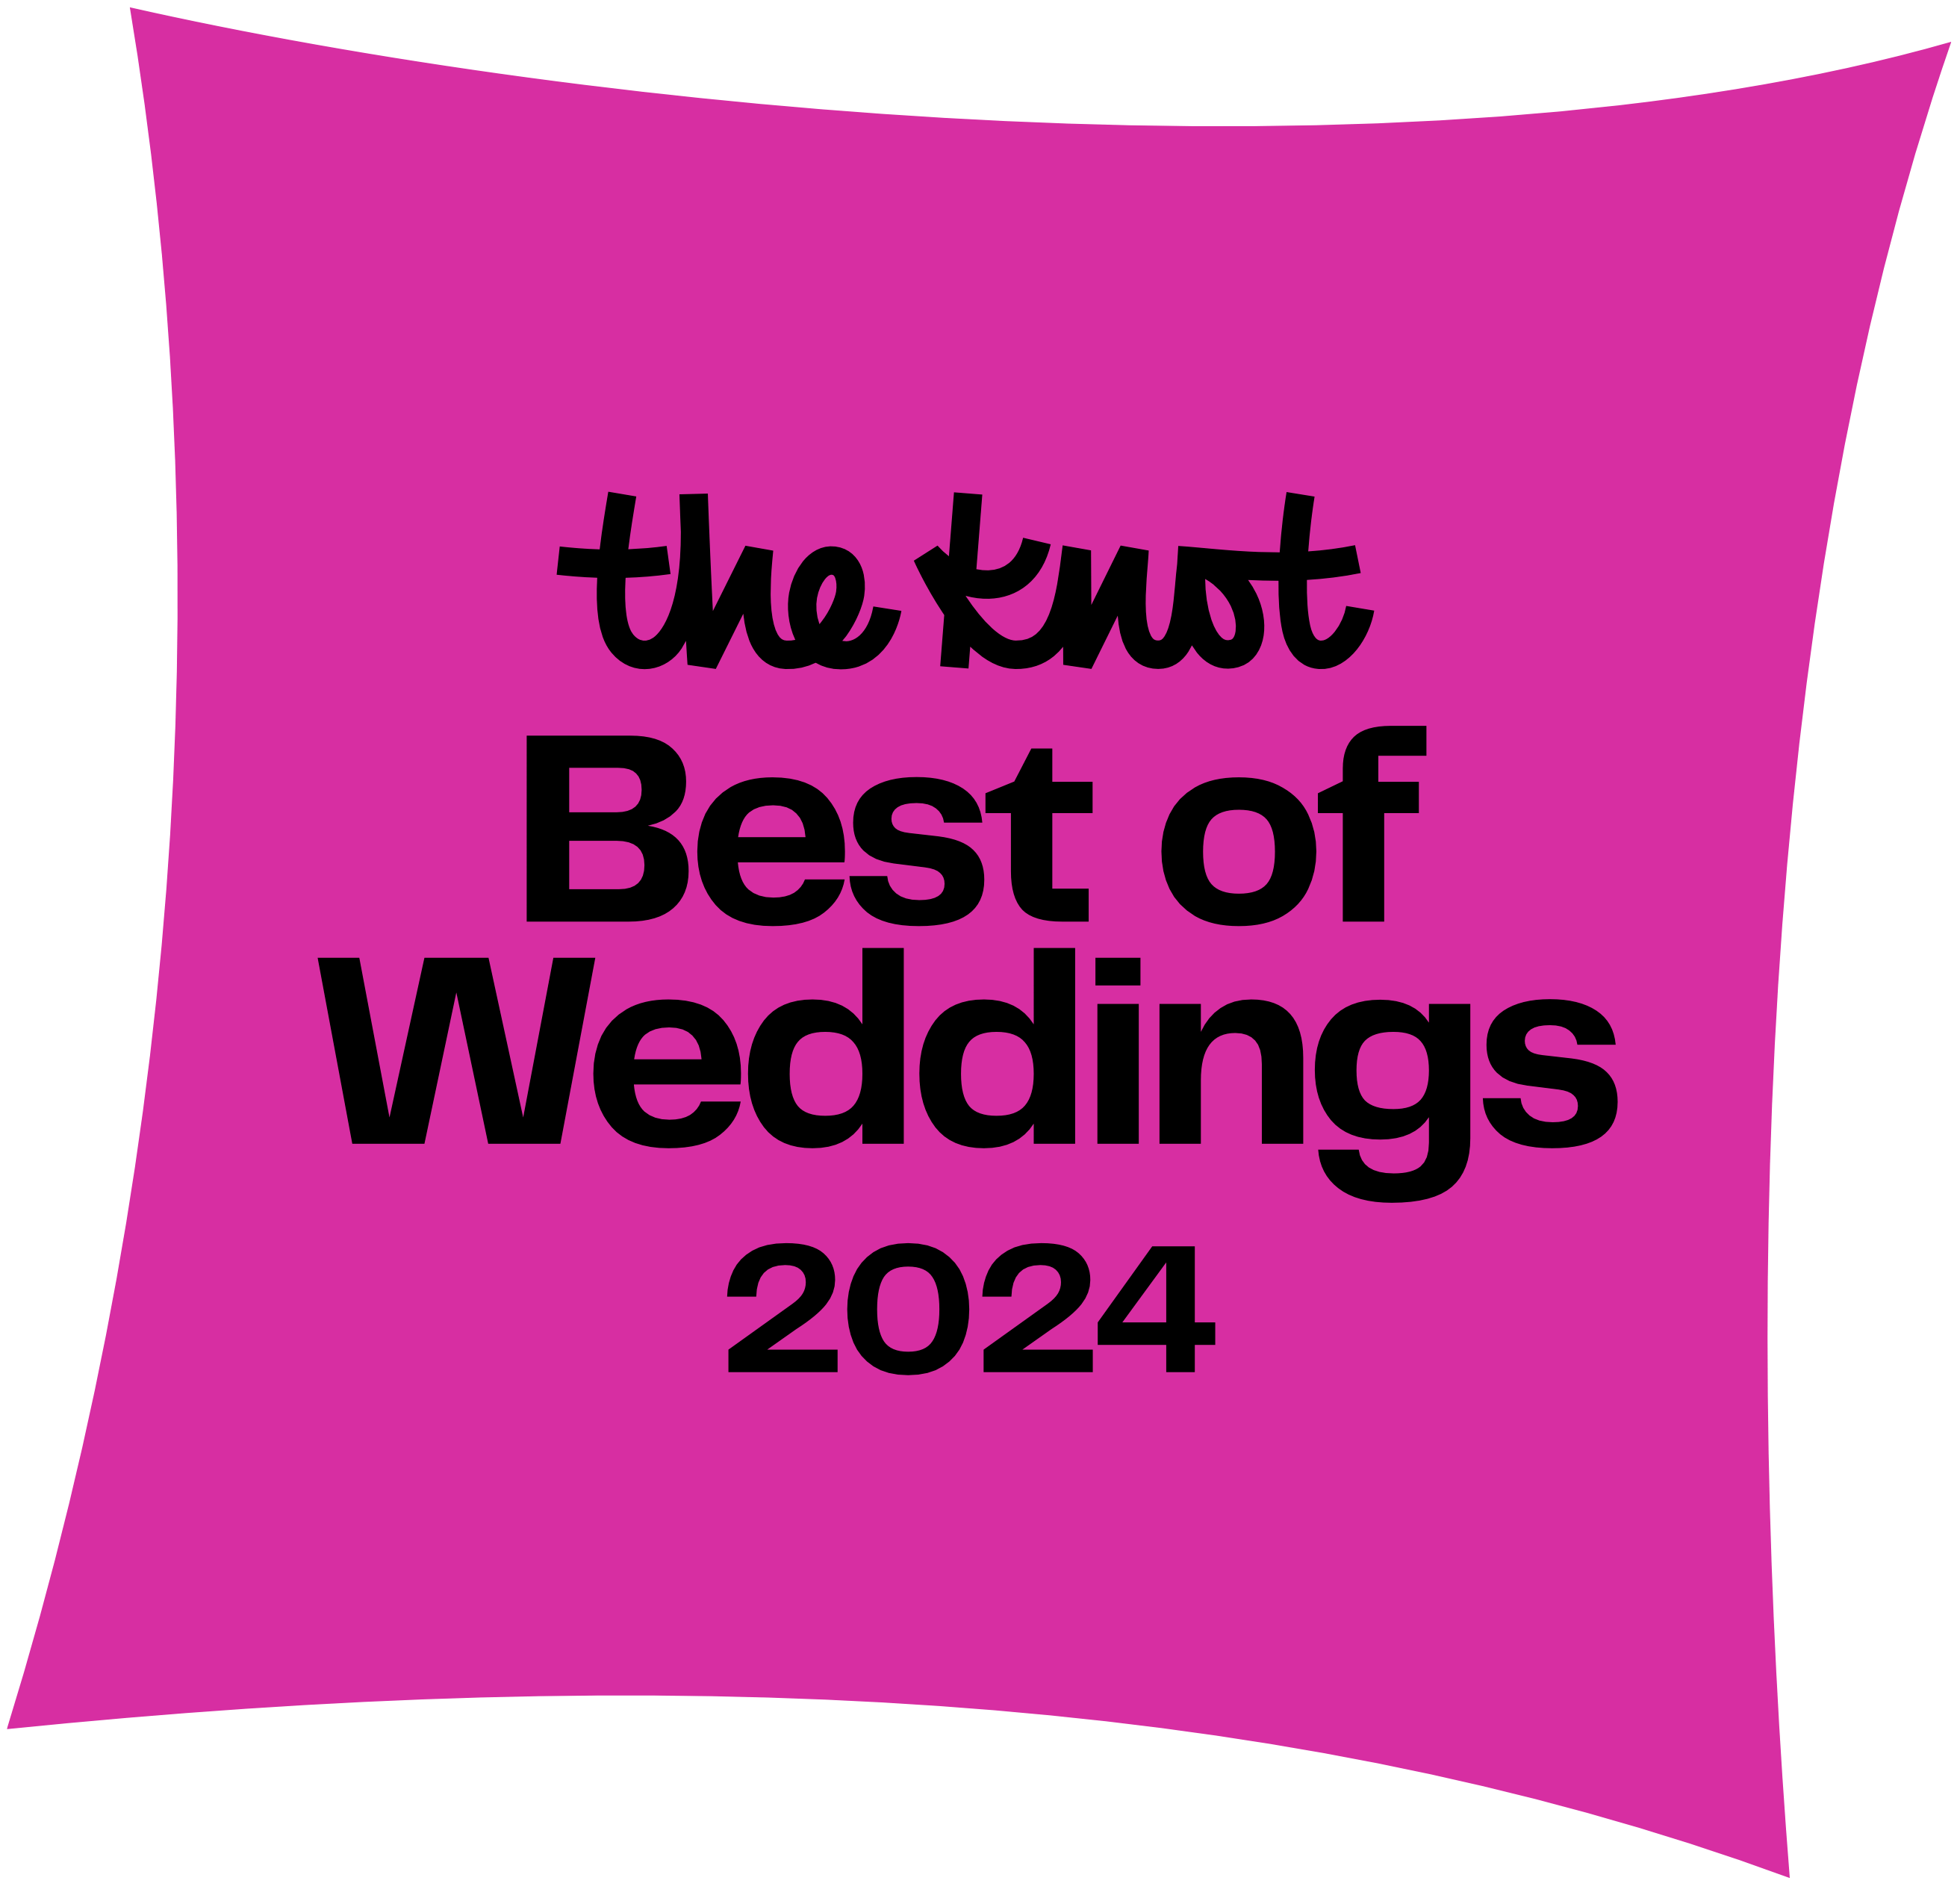 TheKnot Best of Weddings 2024